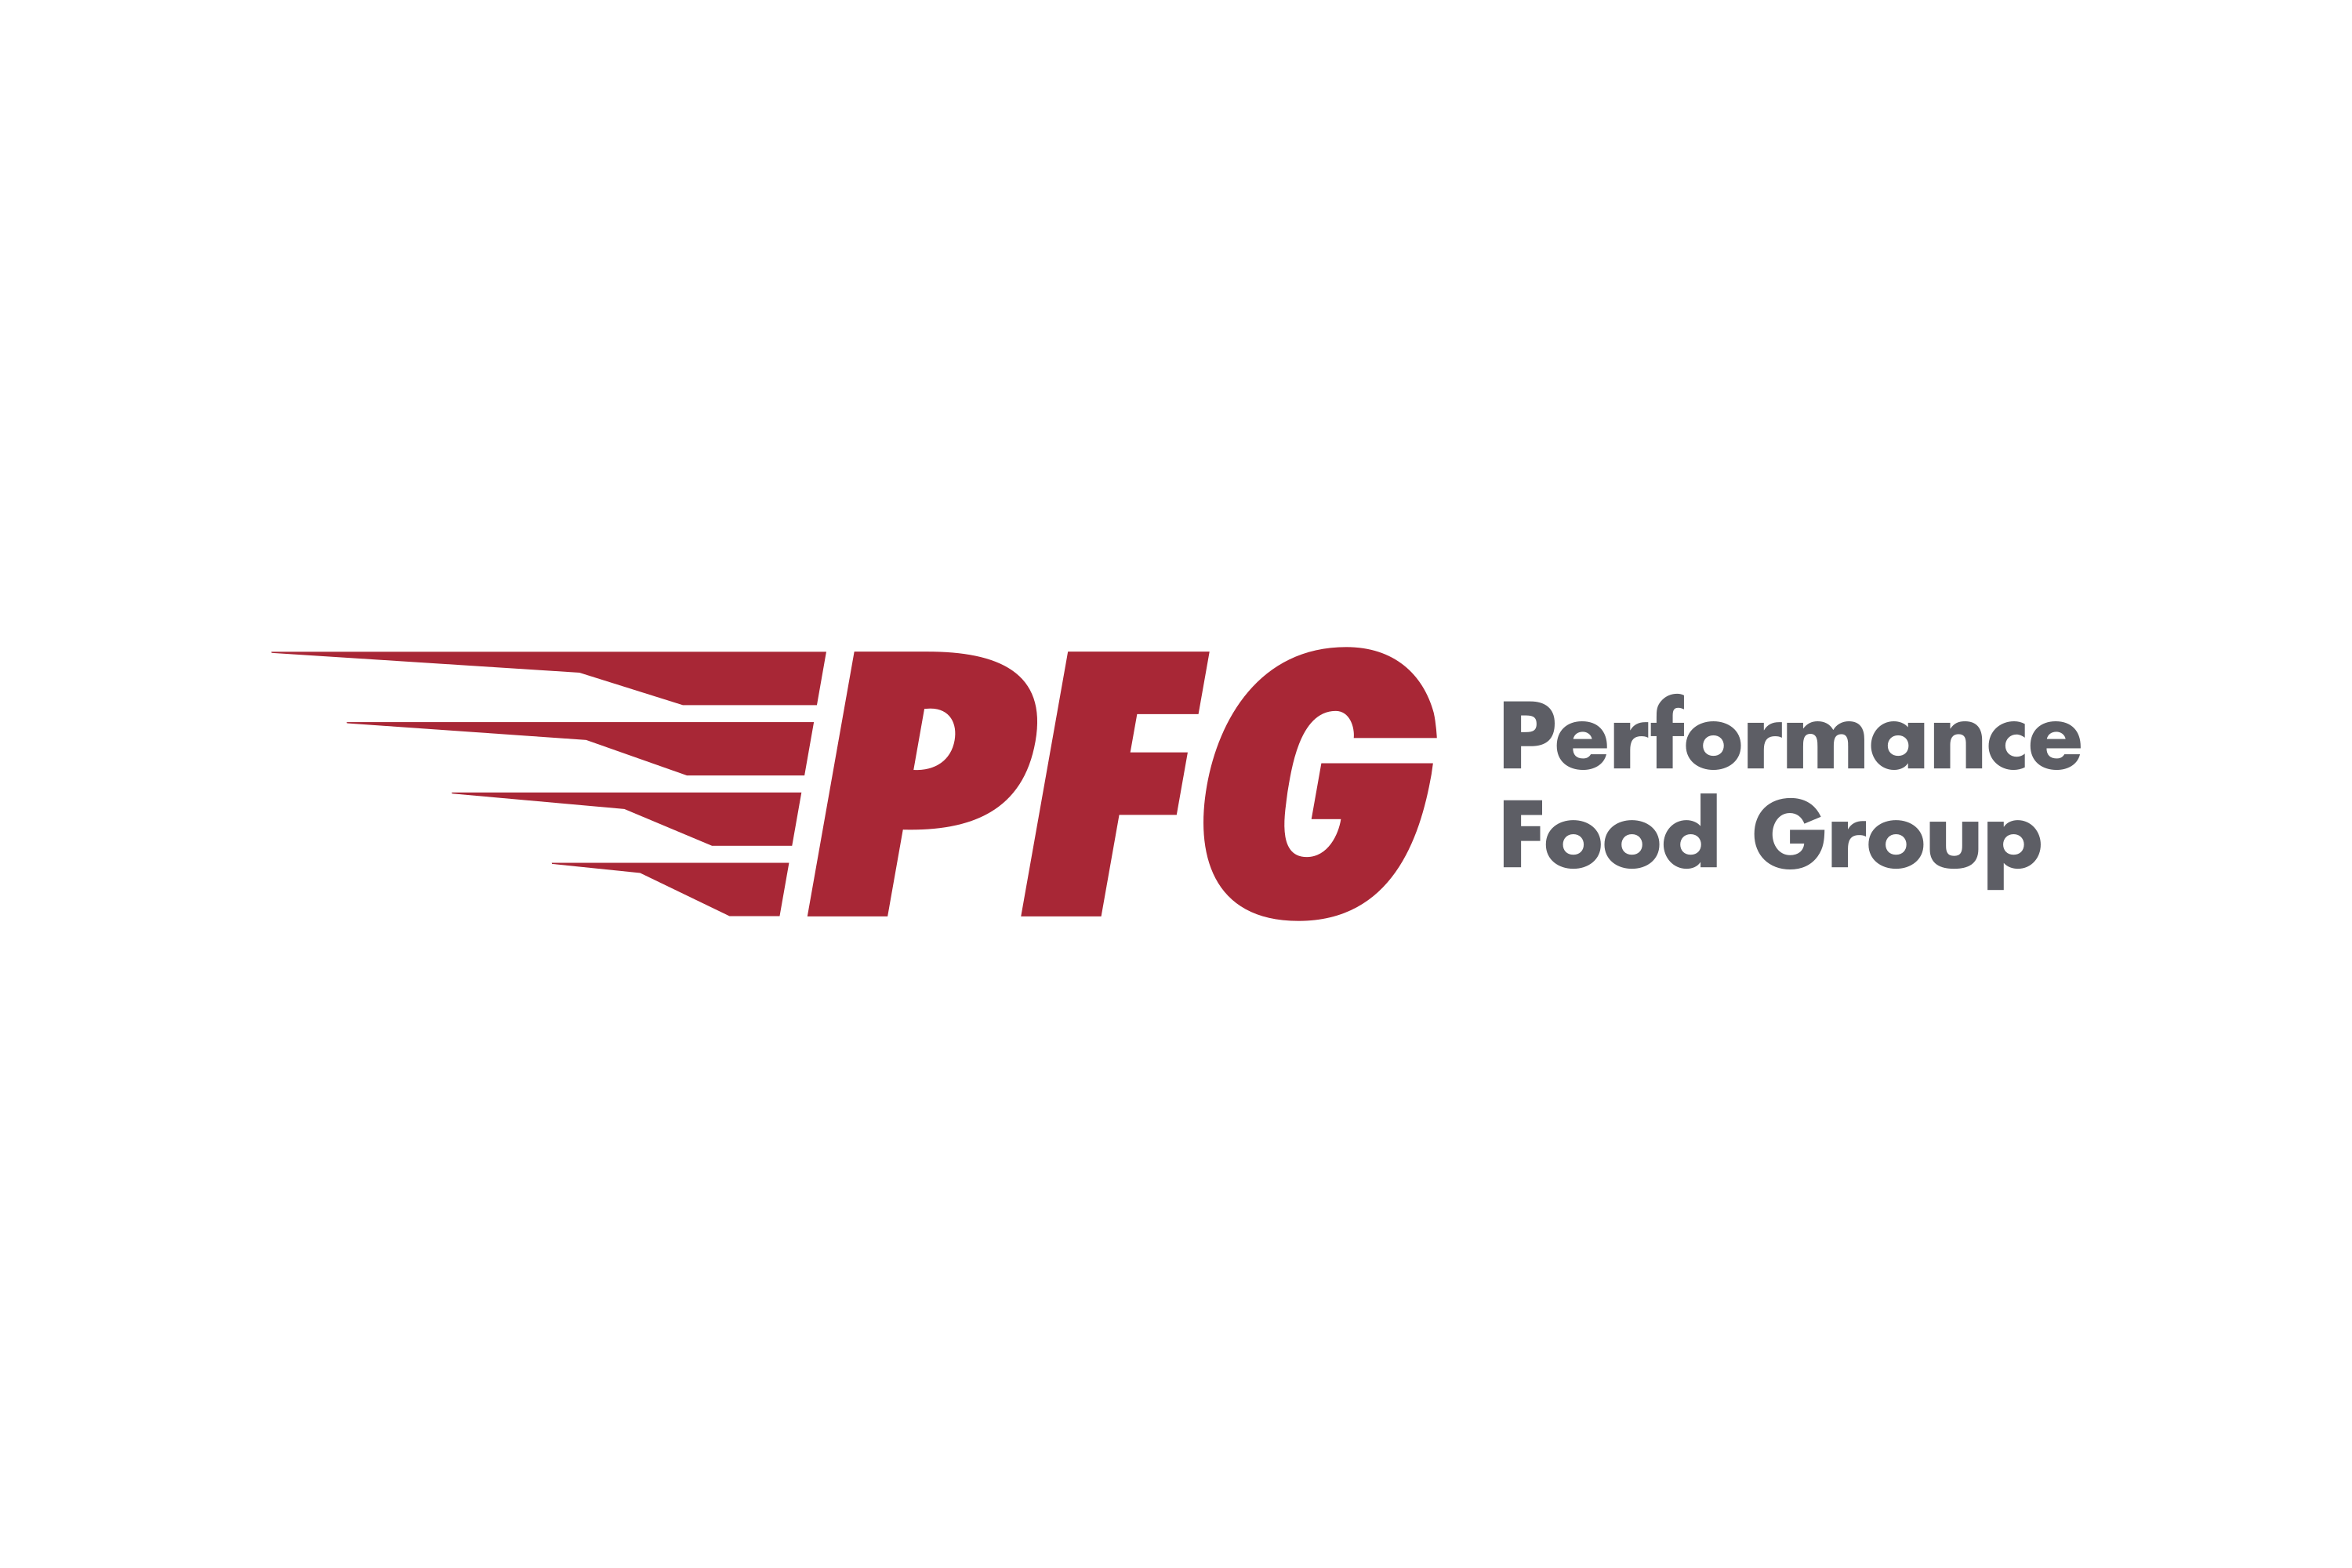 Performance Food Group Logo